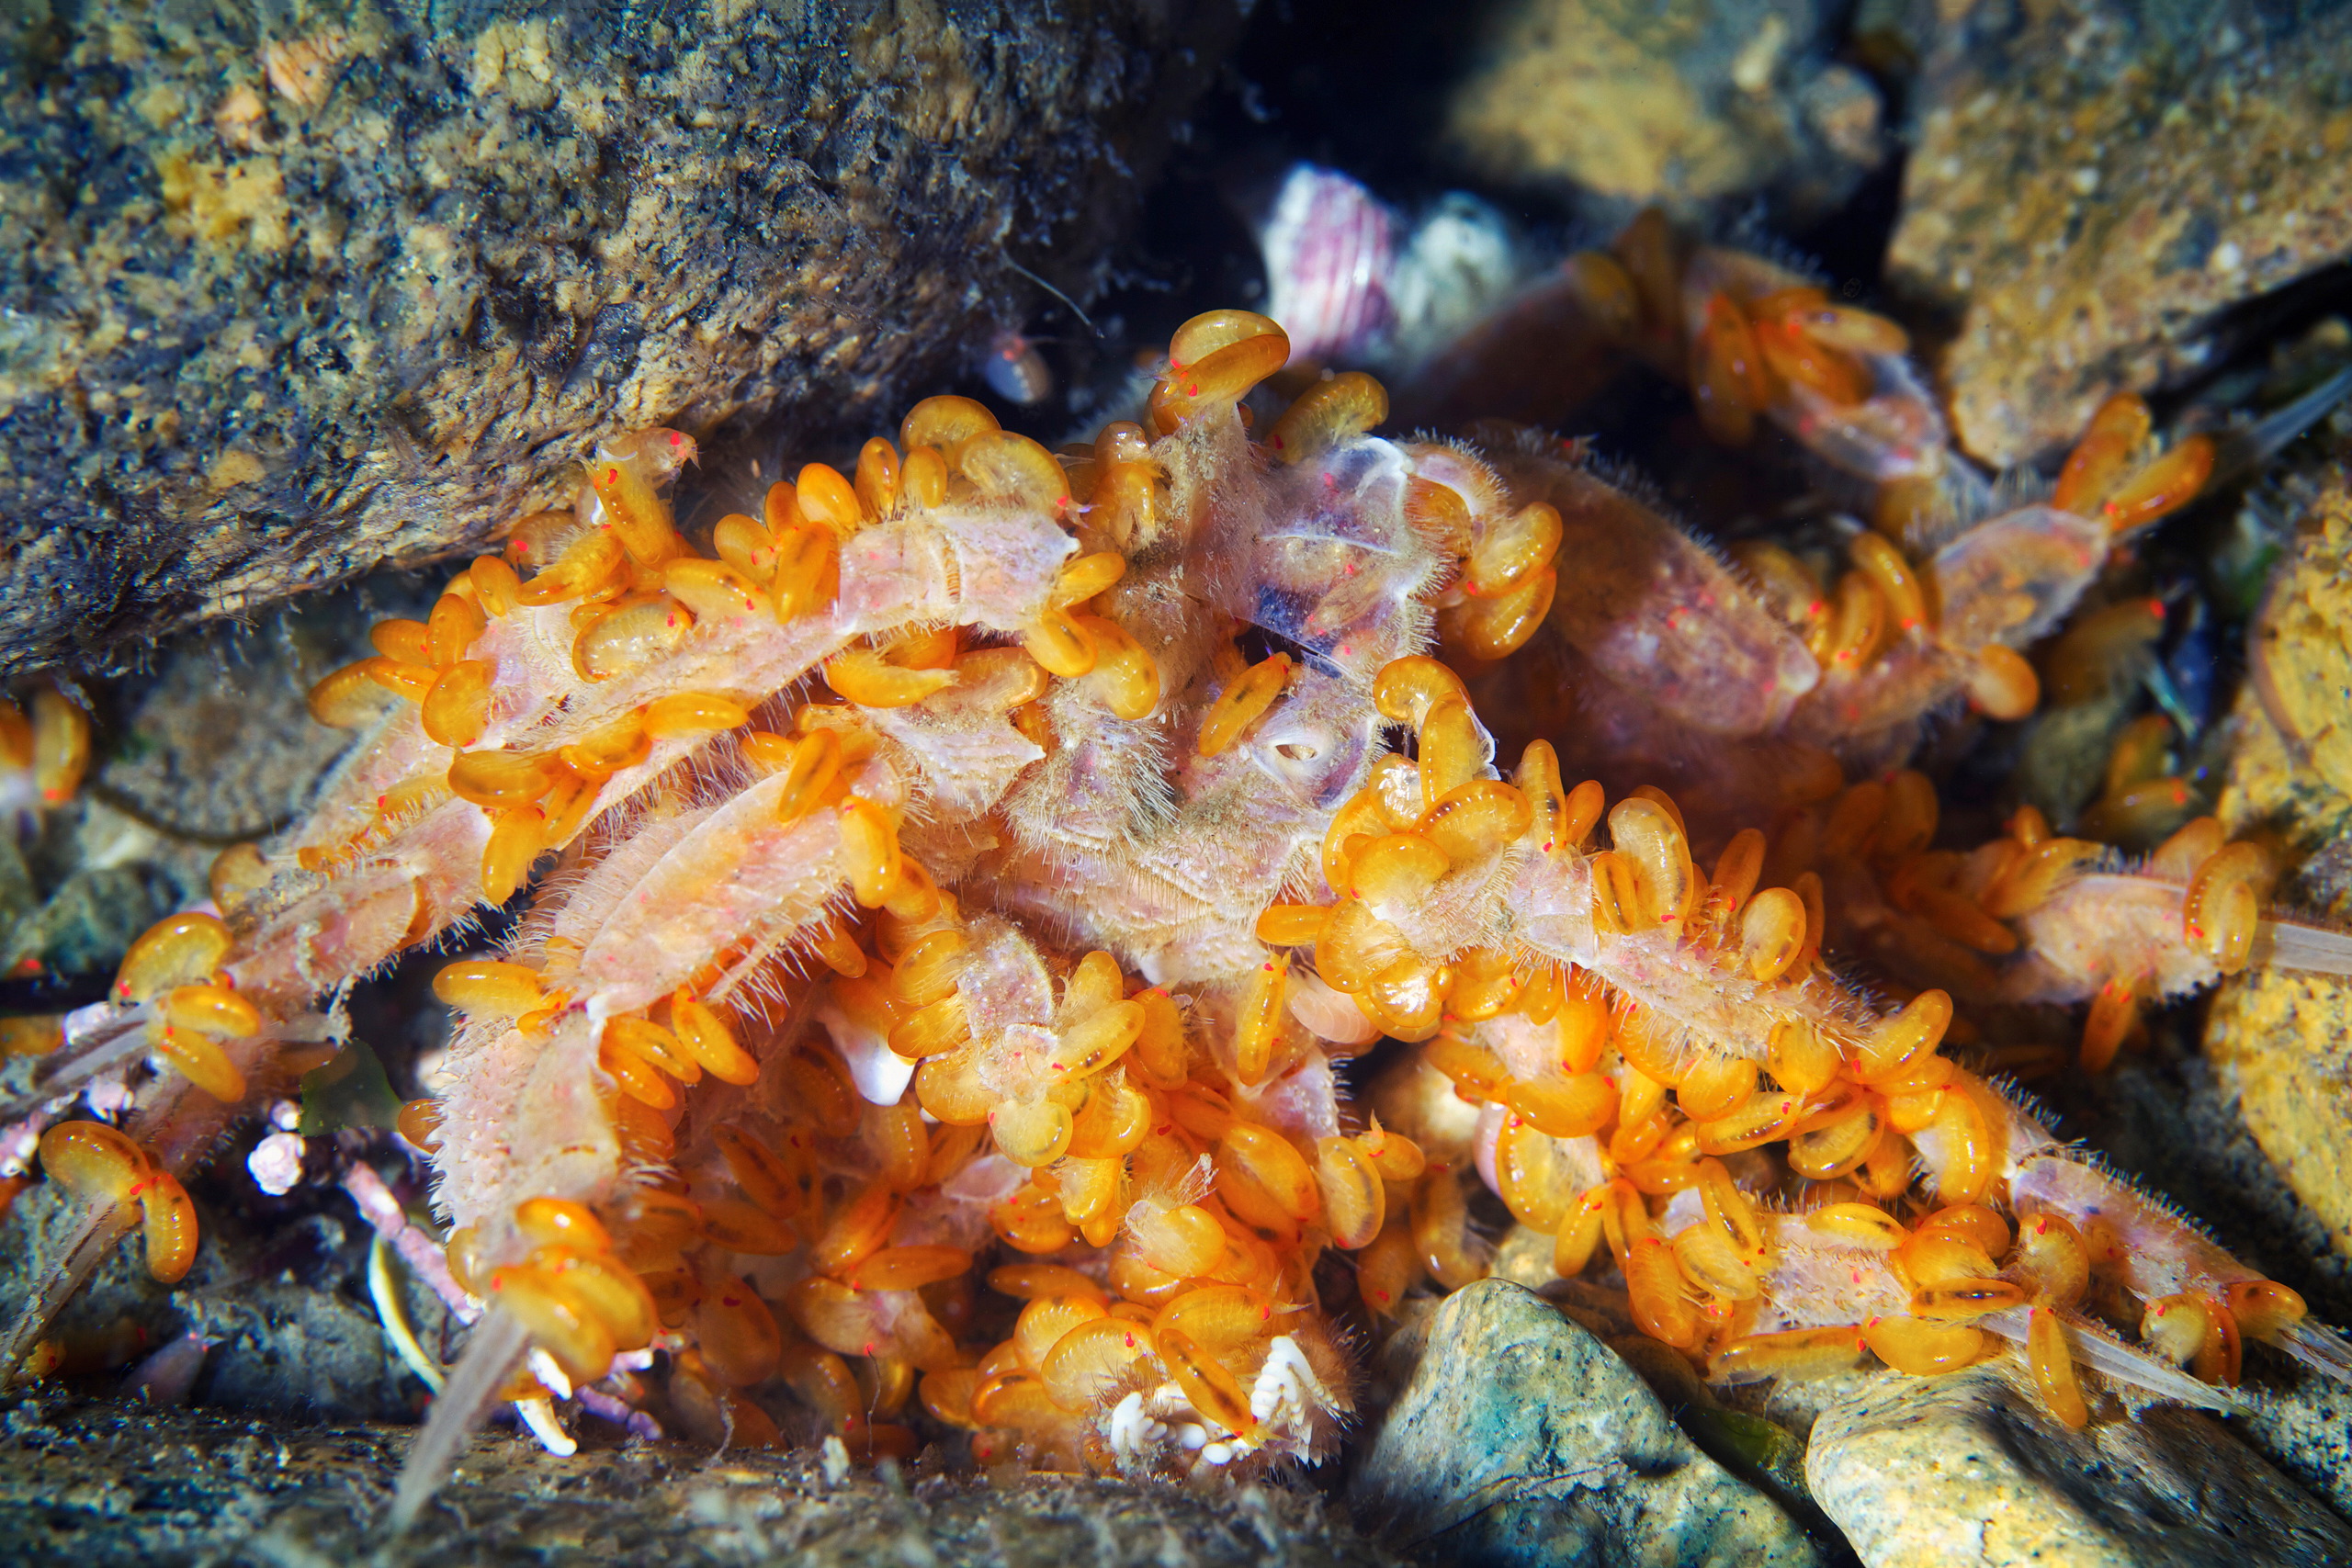 Amphipoda – Anonyx nugax feeding dead crab